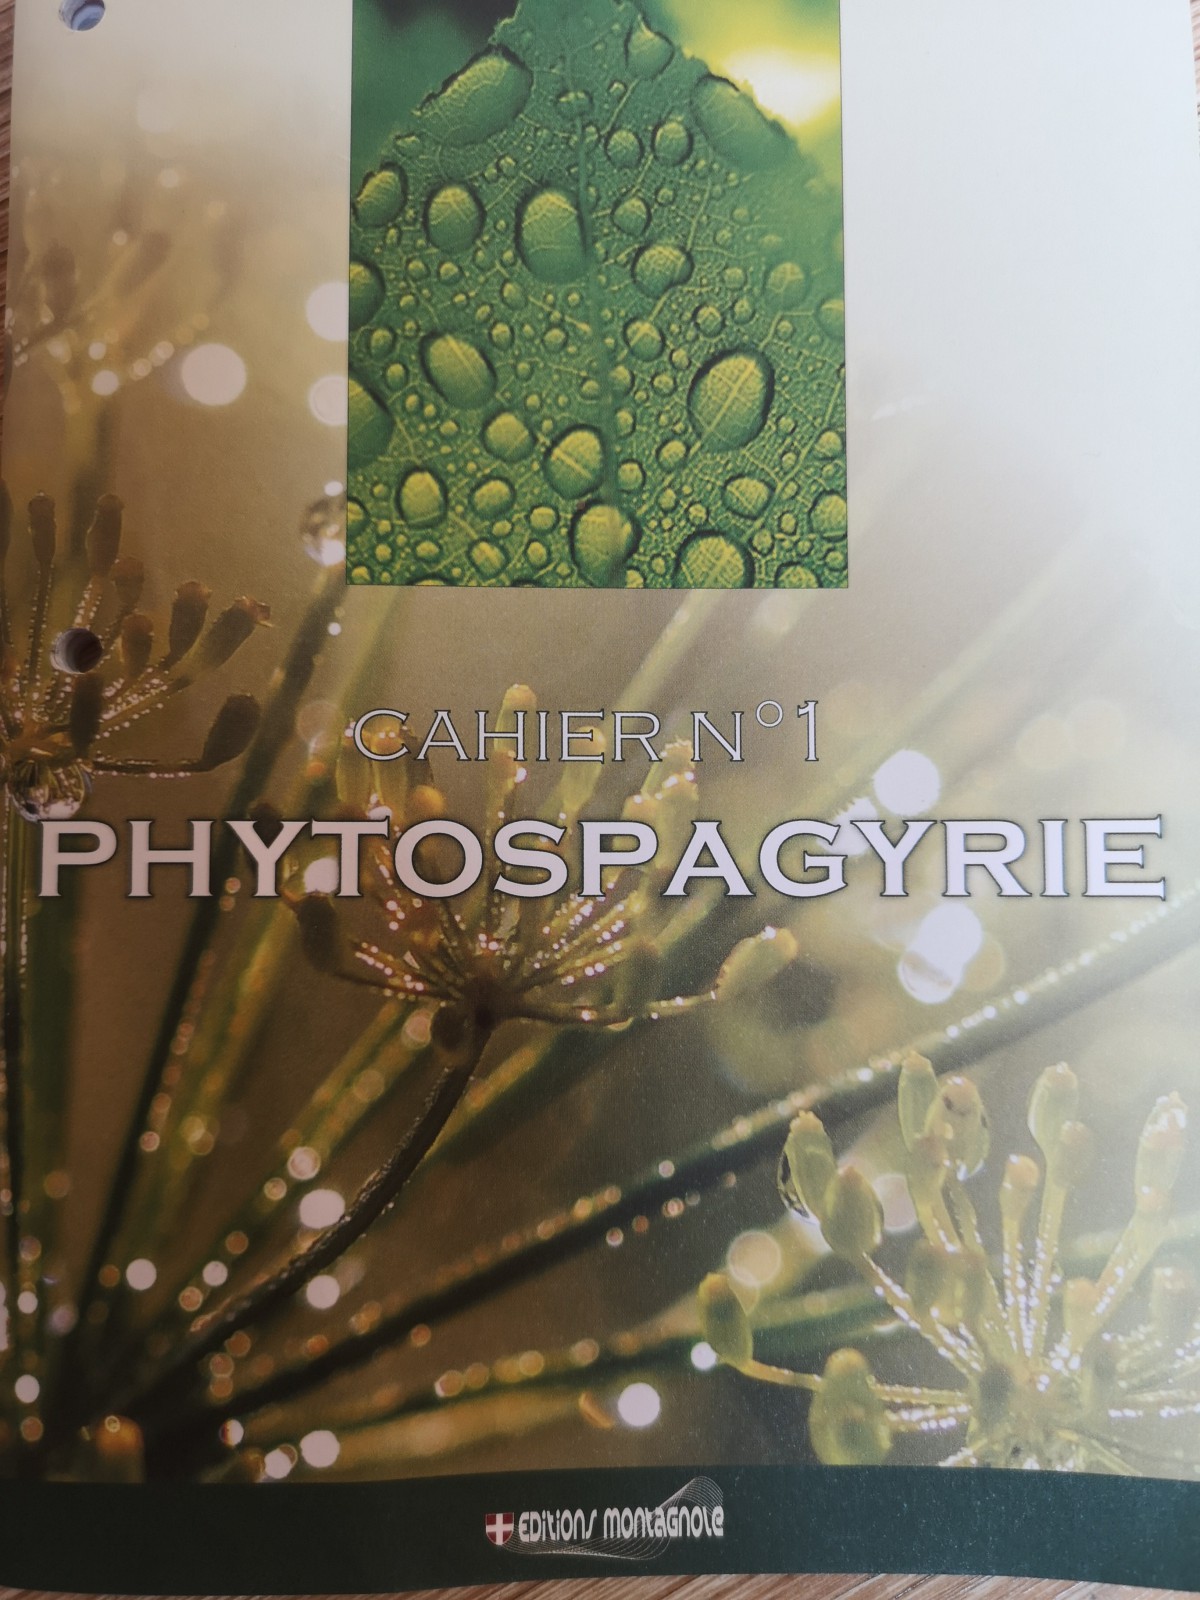 LIVRE Phytospagyrie Cahier n°1